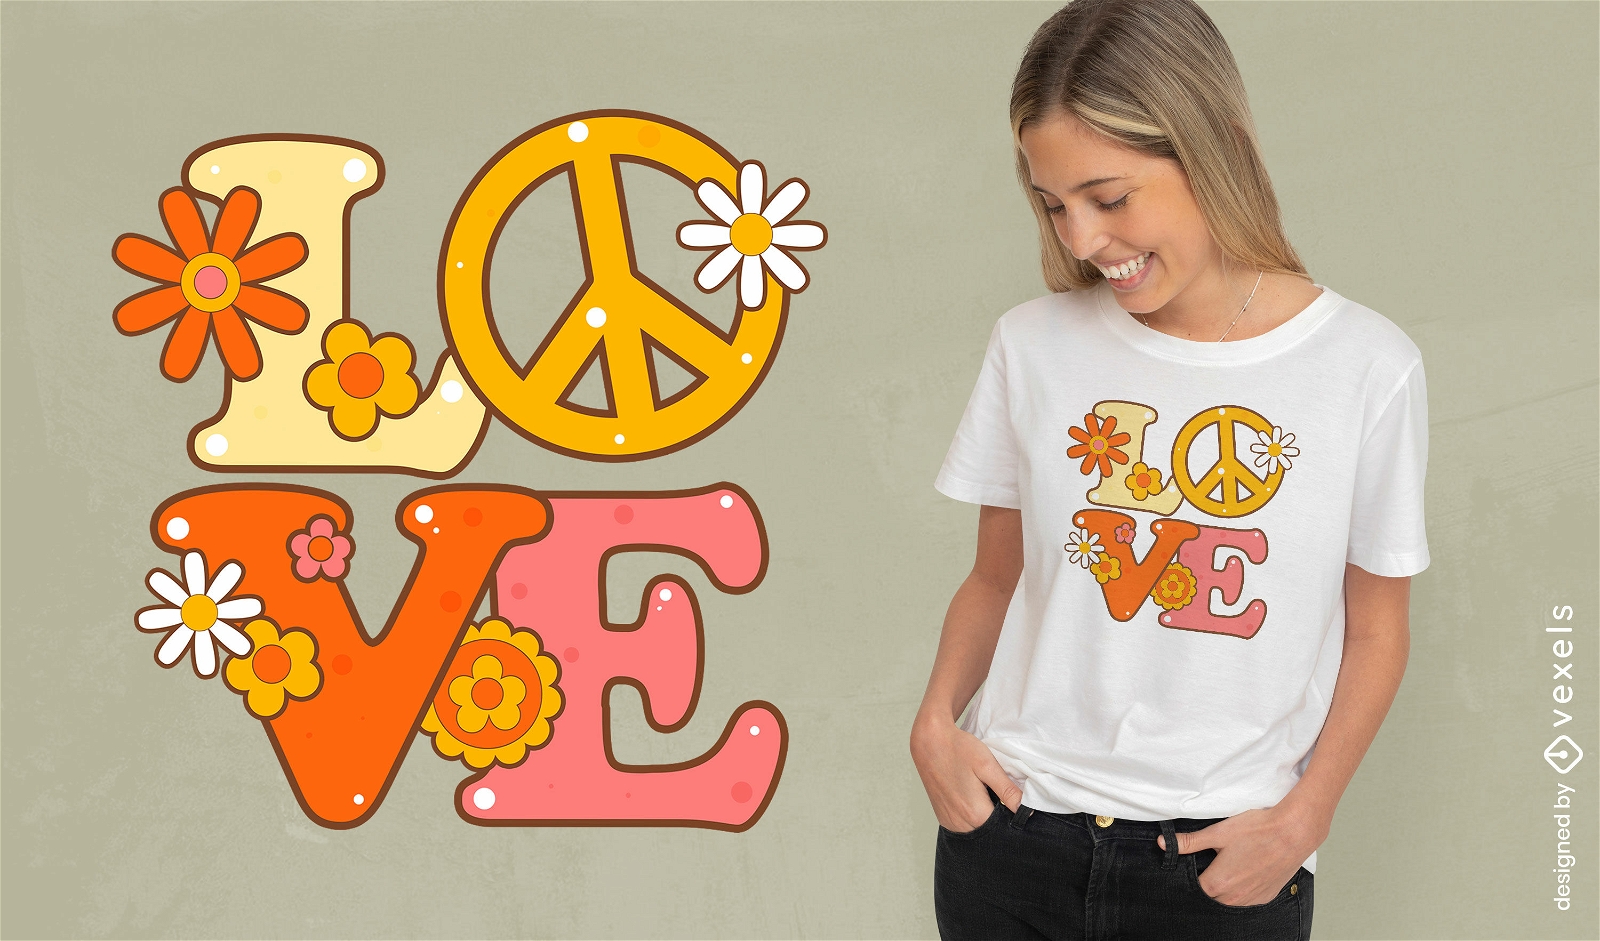 Love peace graphic t-shirt design